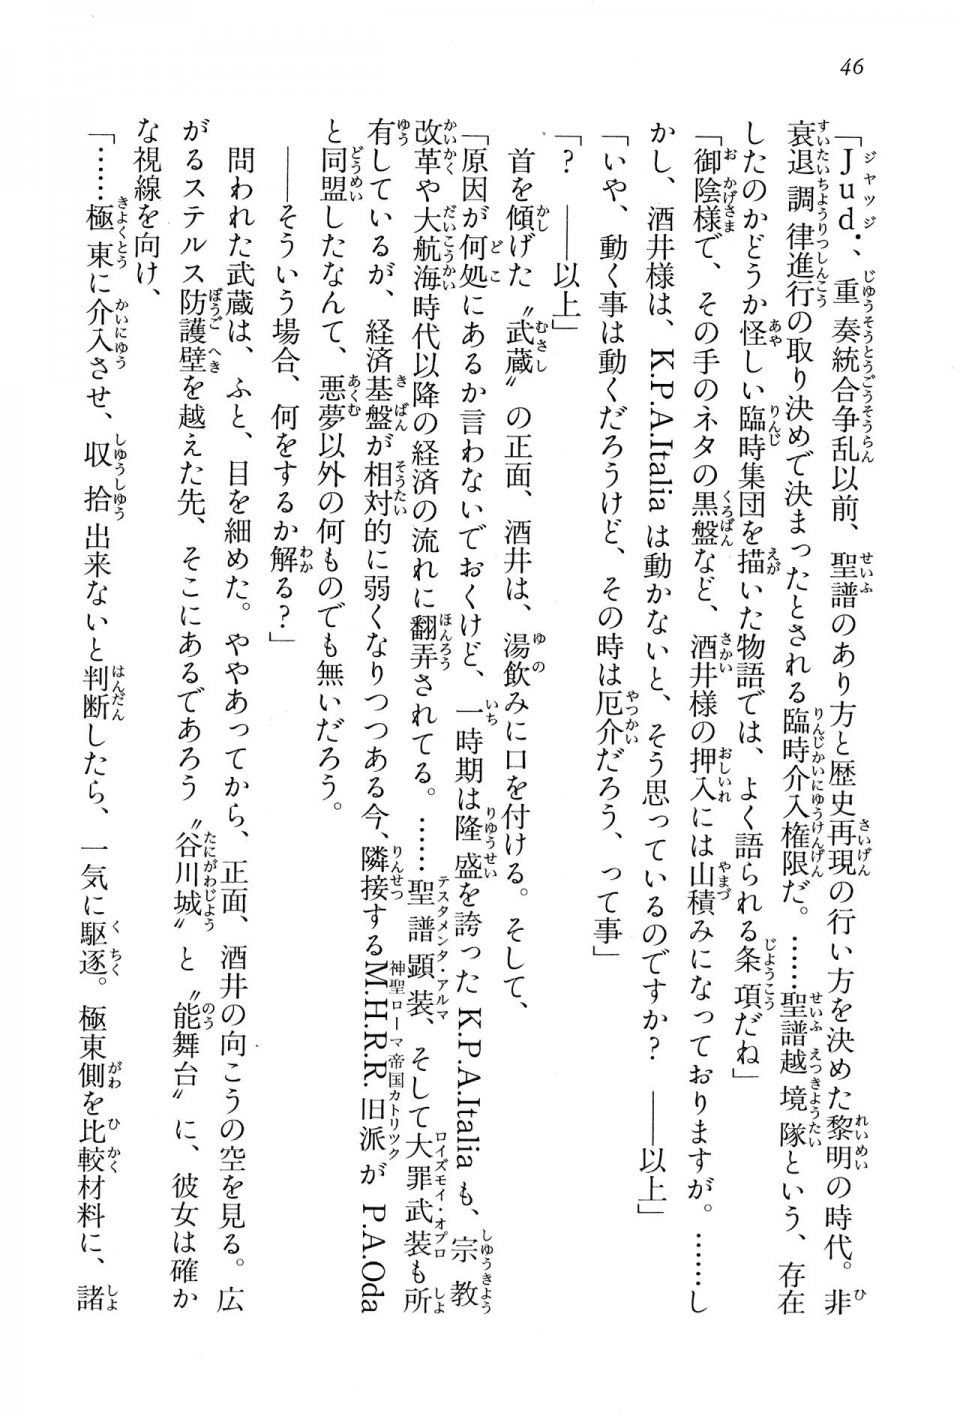 Kyoukai Senjou no Horizon BD Special Mininovel Vol 1(1A) - Photo #50